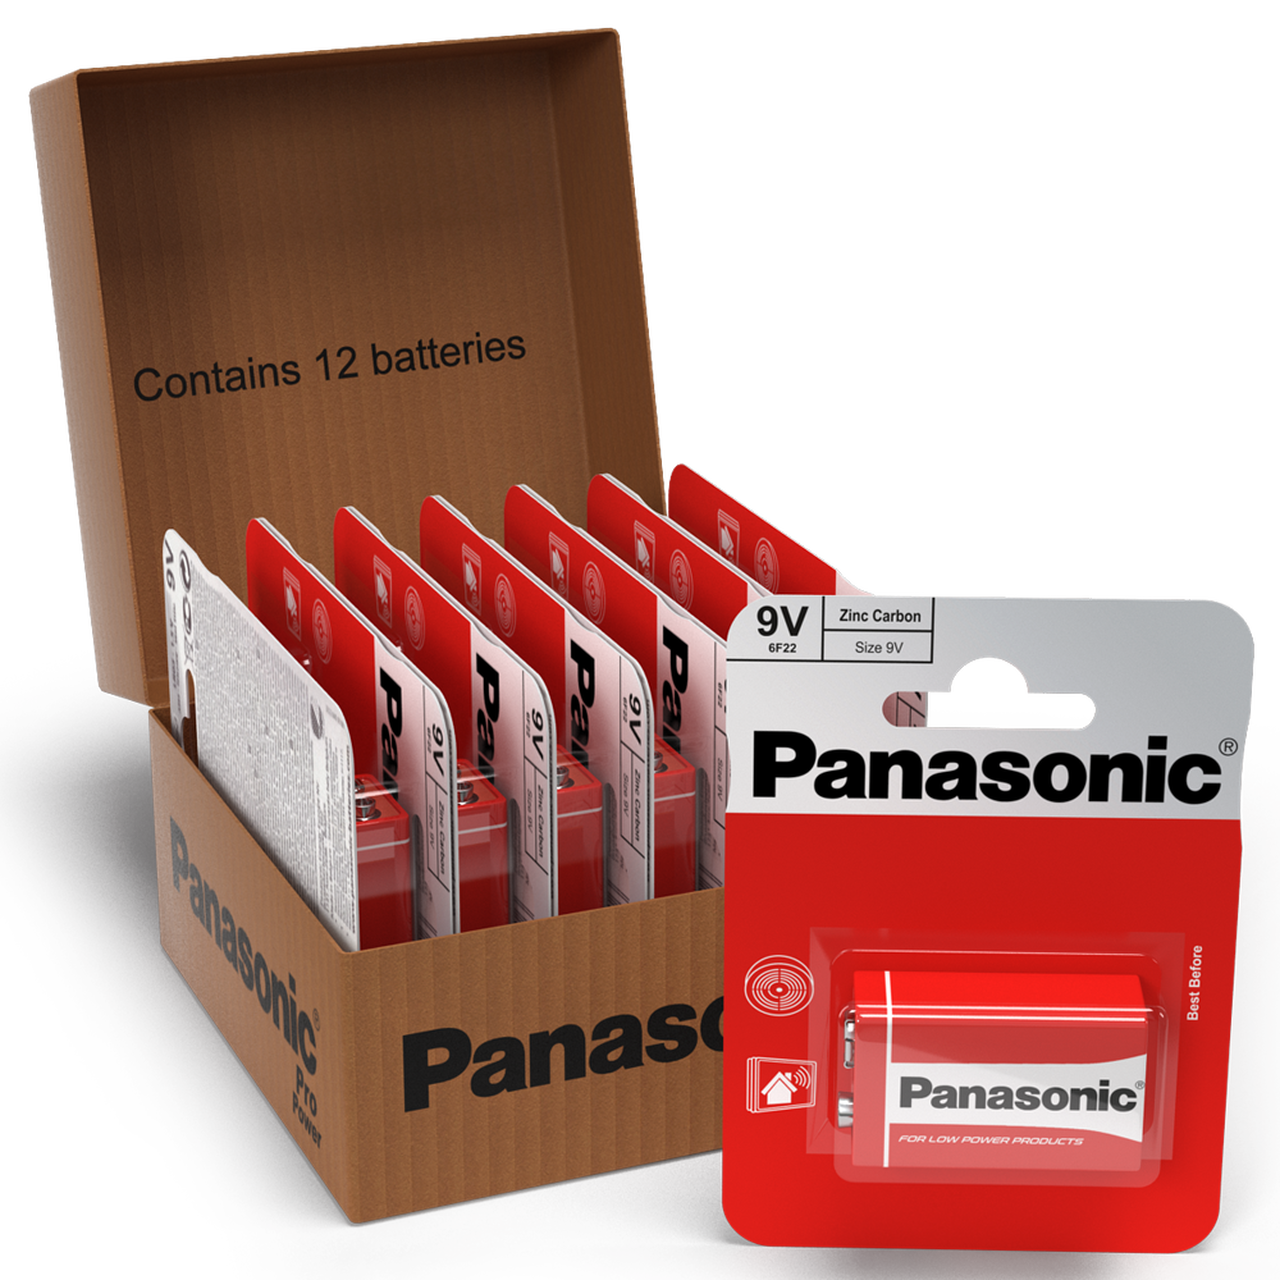 Panasonic 9V Zinc Carbon Batteries (12pcs)